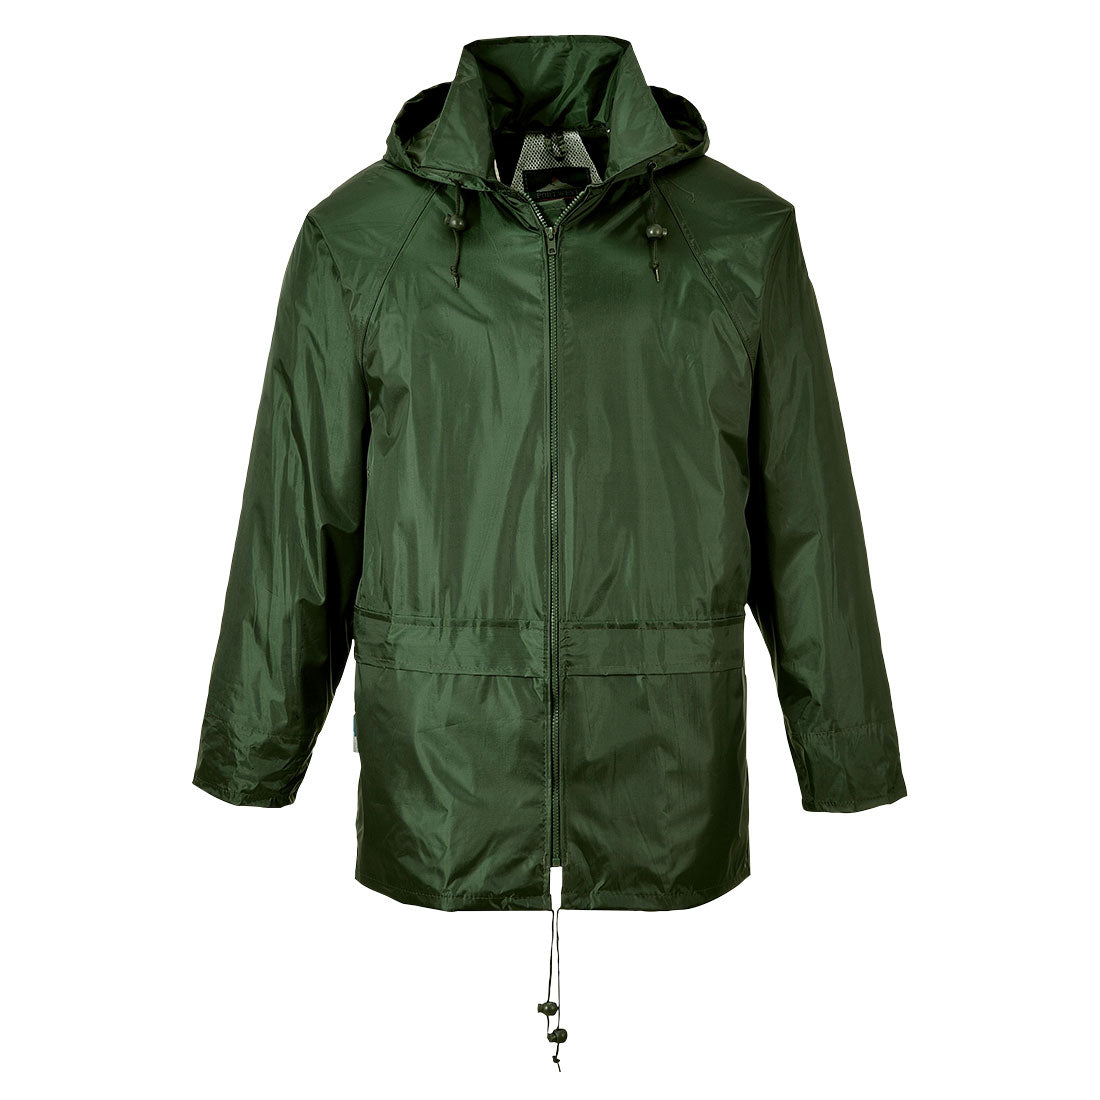 Portwest S440 Olive Sz M Classic Rain Jacket Coat Waterproof Hooded Zipped